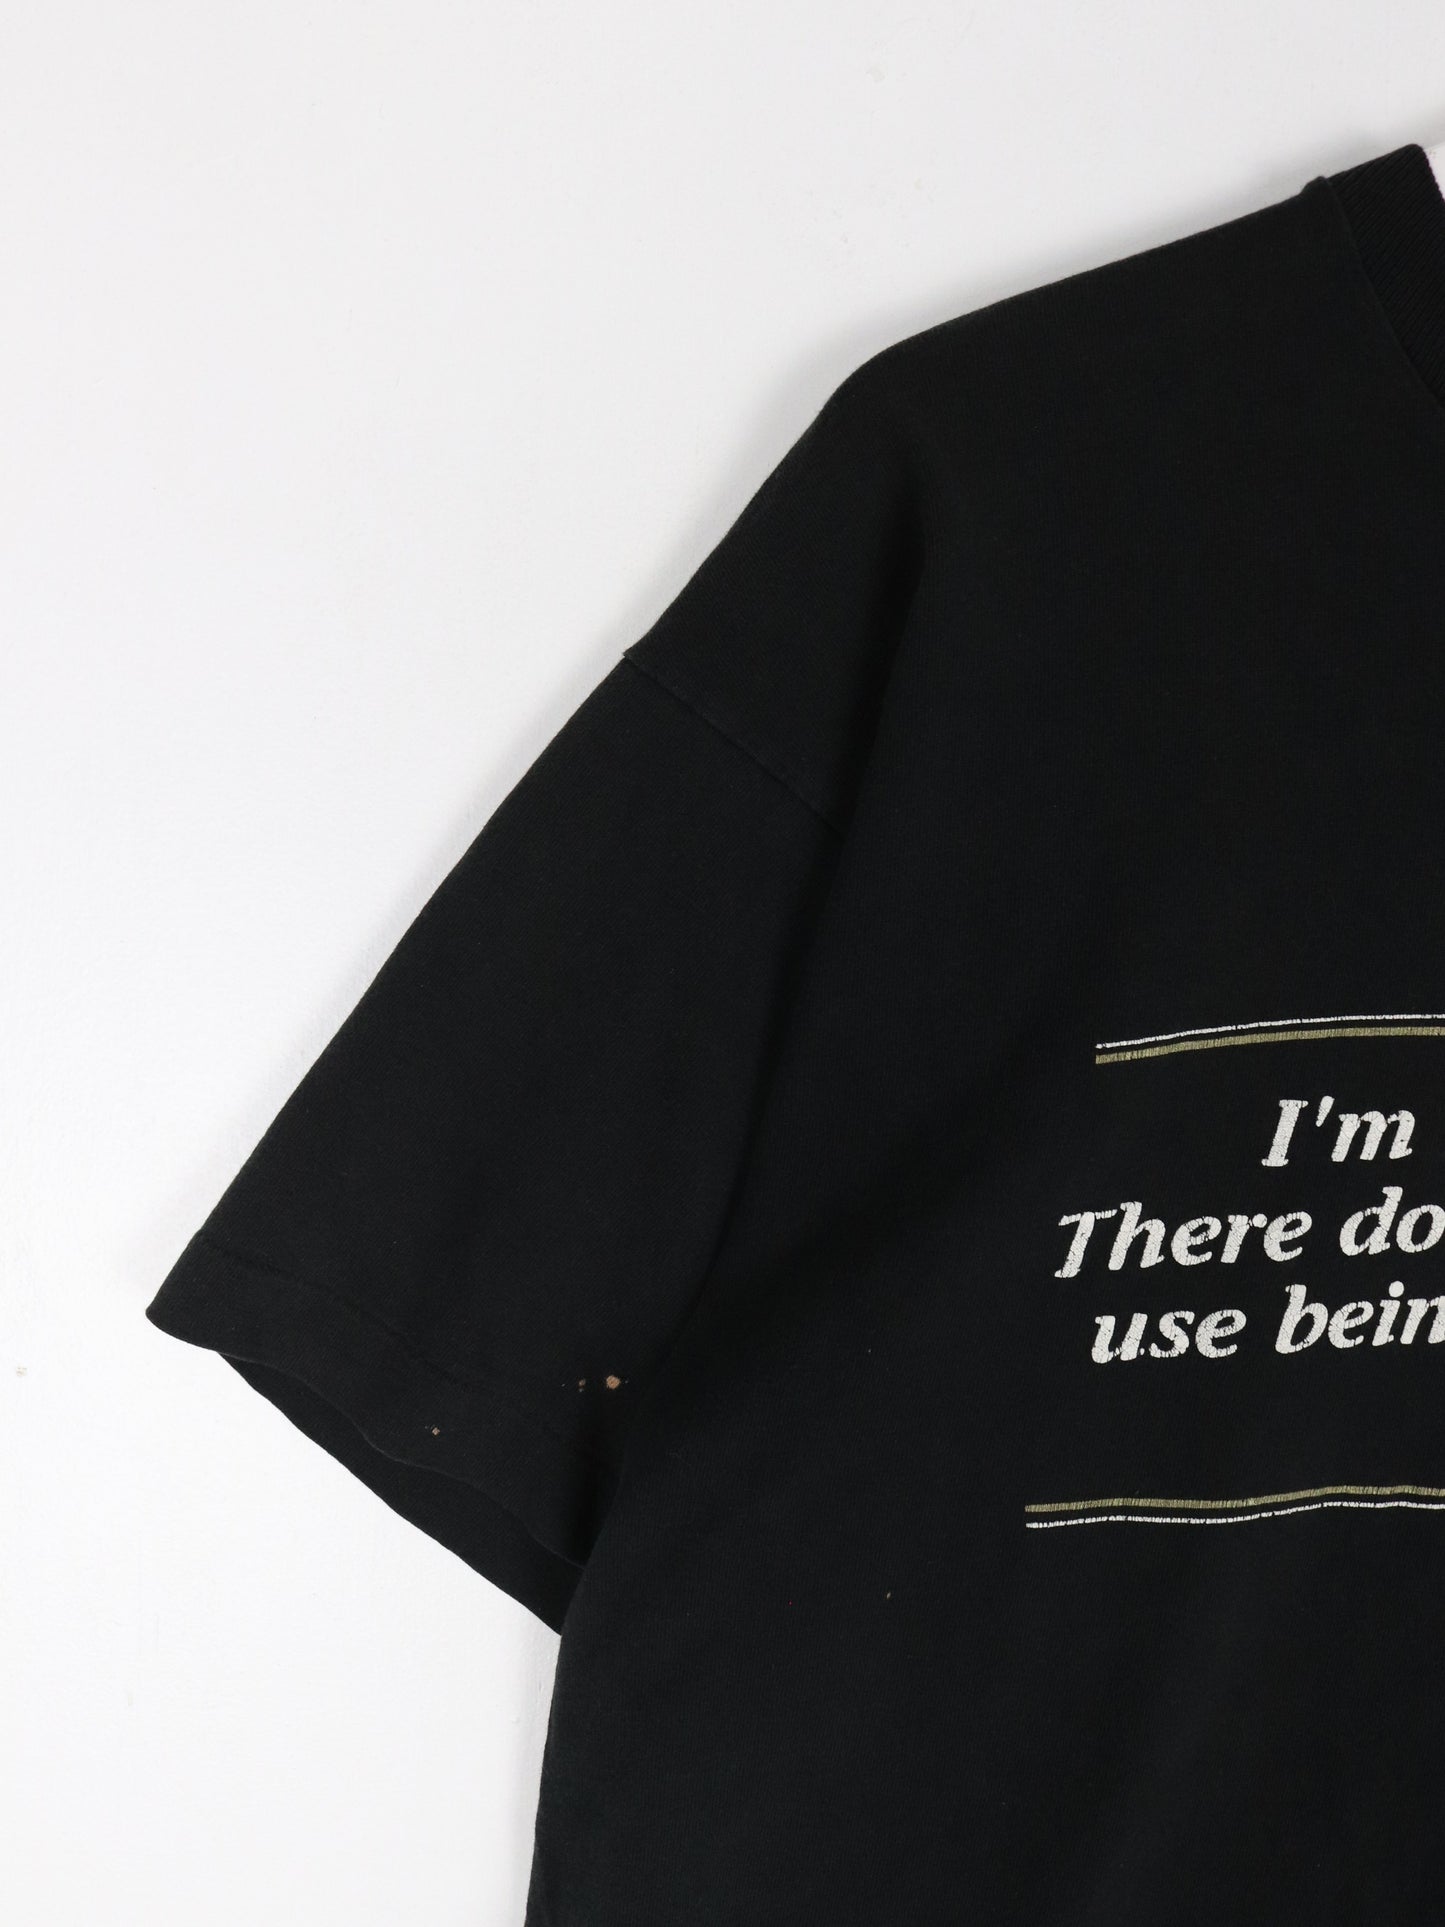 Vintage Optimist Winston Churchill T Shirt Mens XL Black 90s Quote